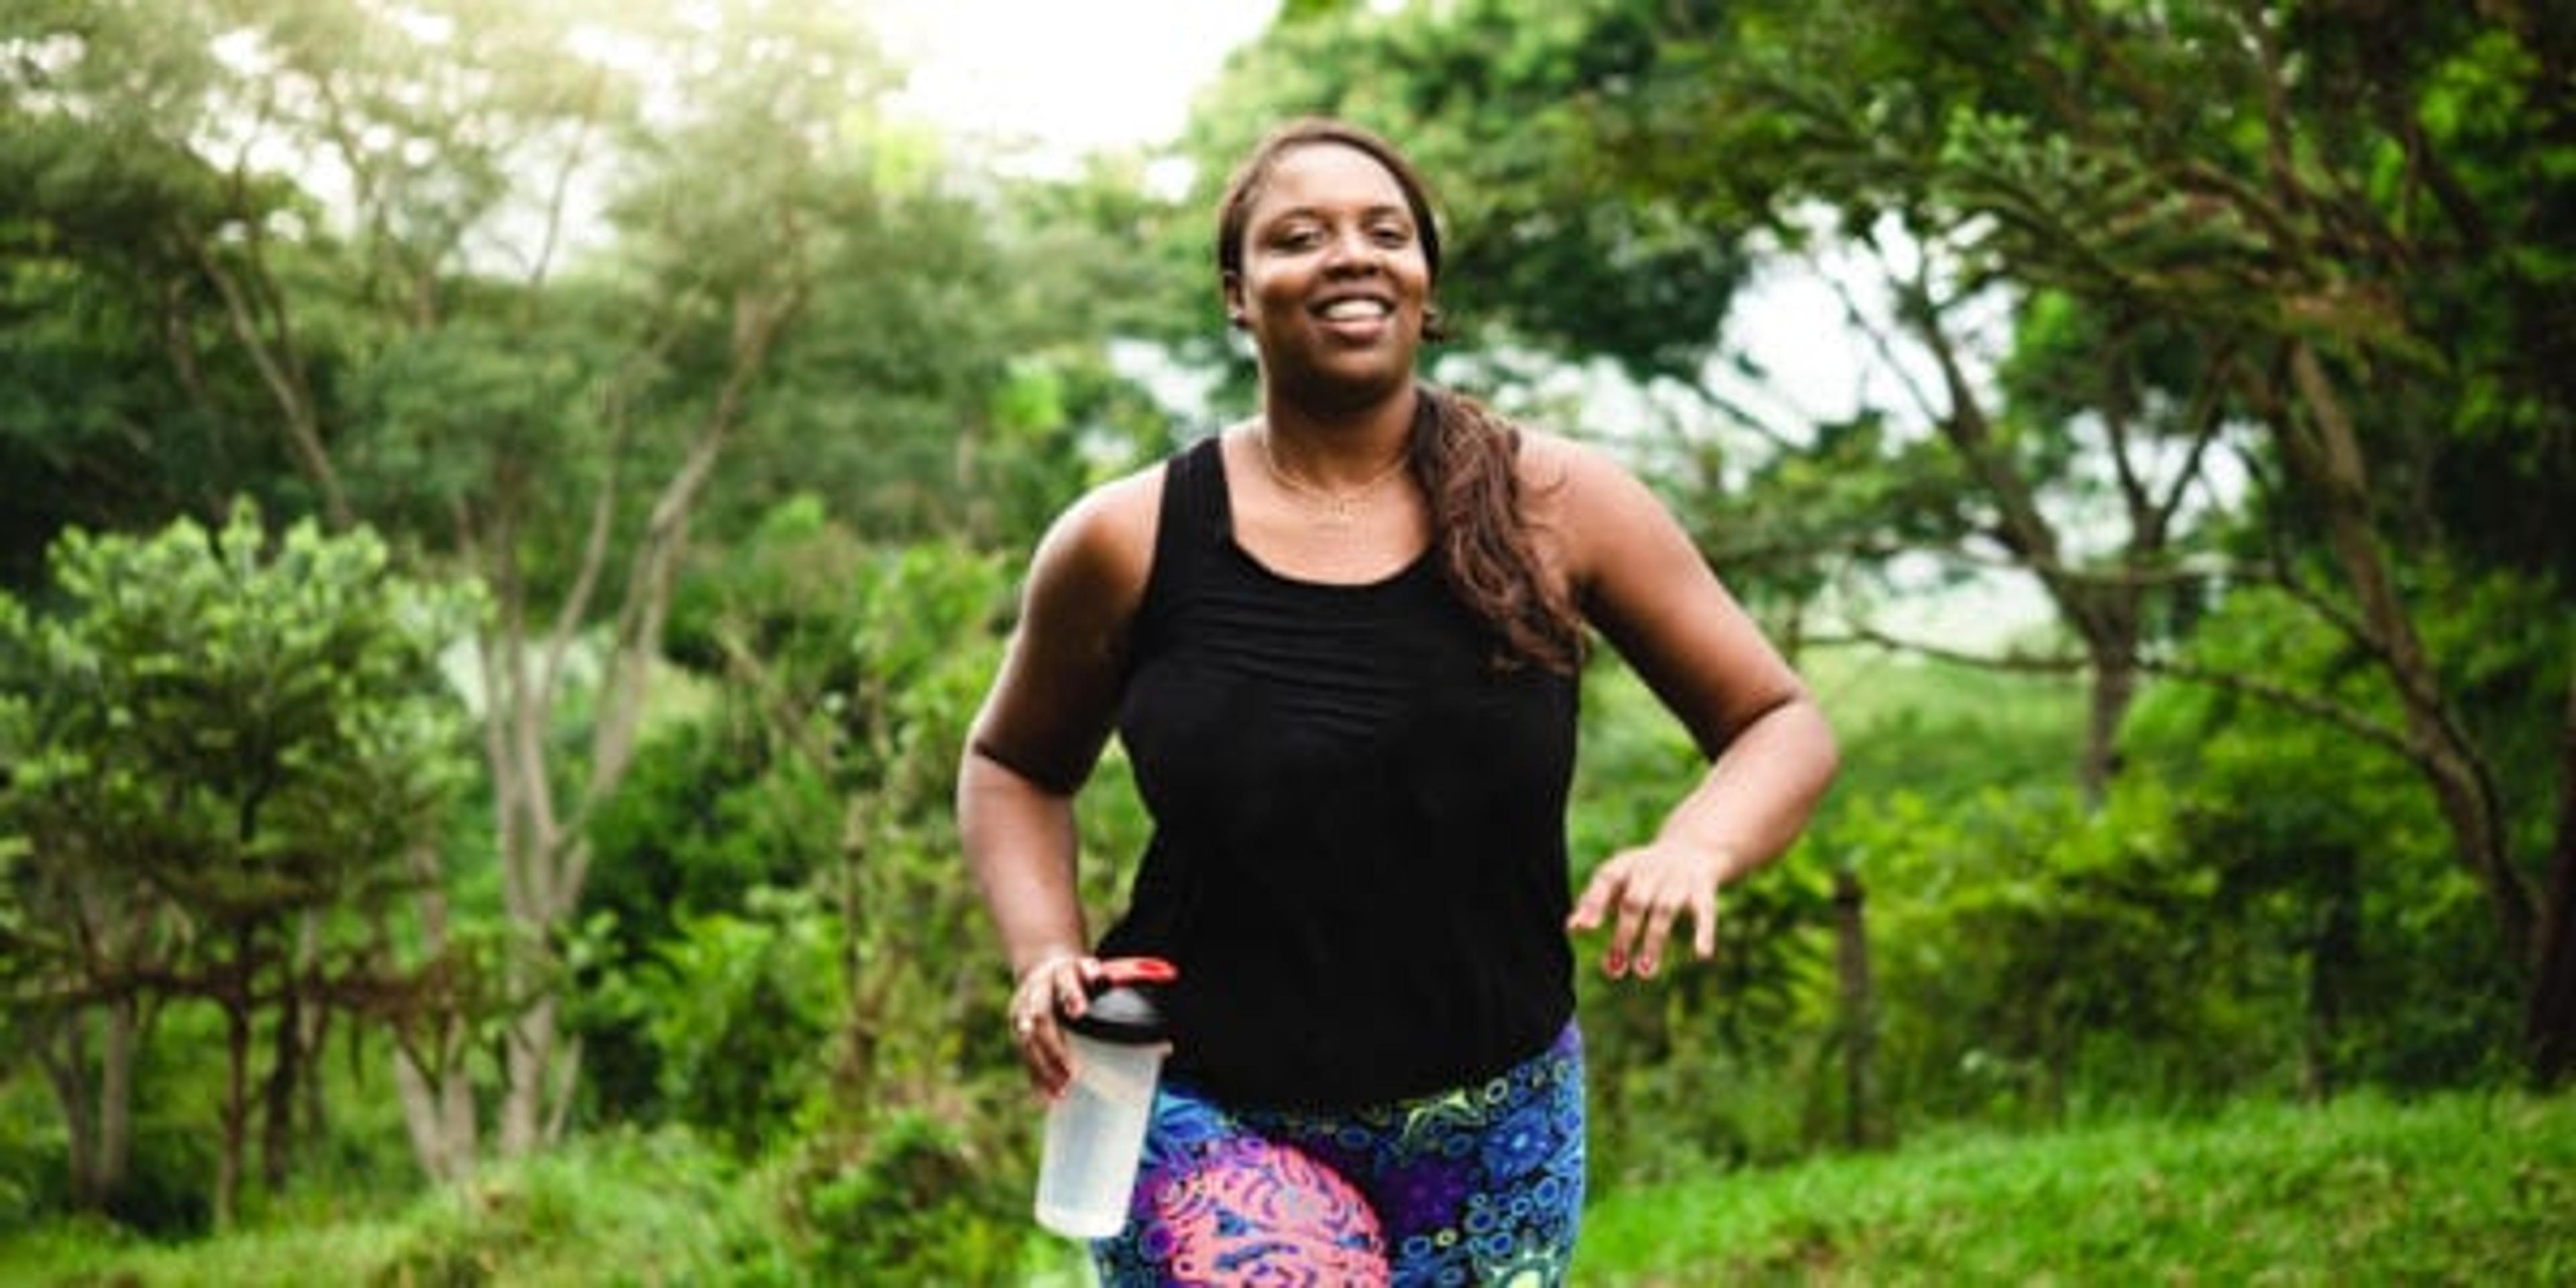 Brazilian woman body positive exercising in nature.